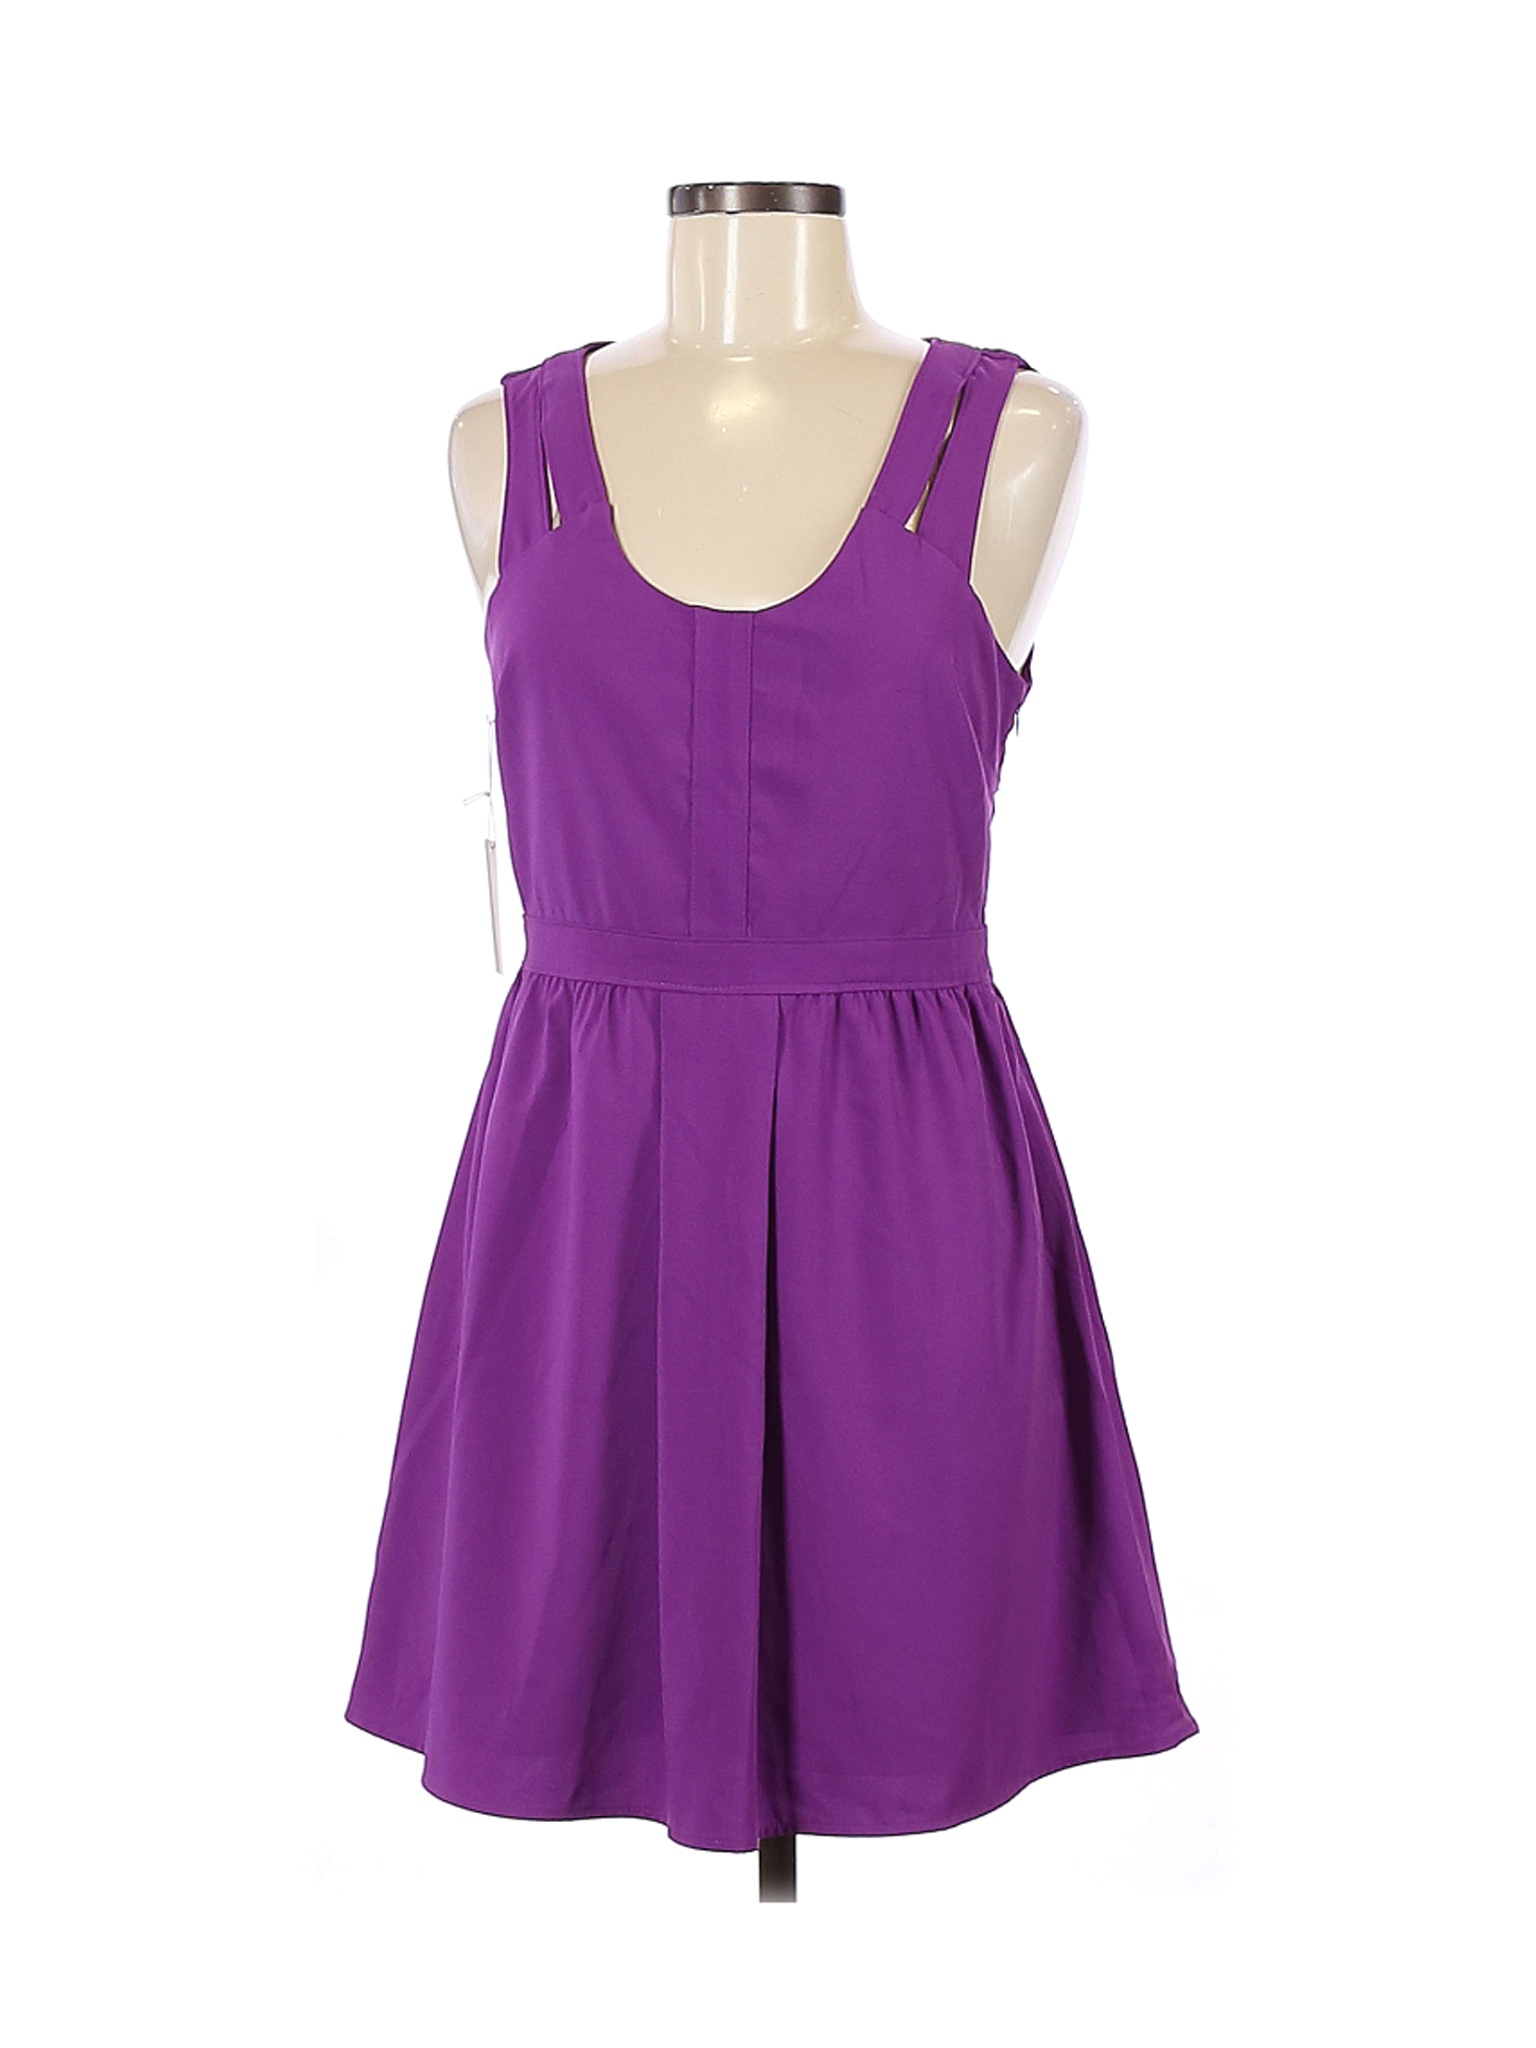 NWT Forever 21 Contemporary Women Purple Casual Dress M | eBay